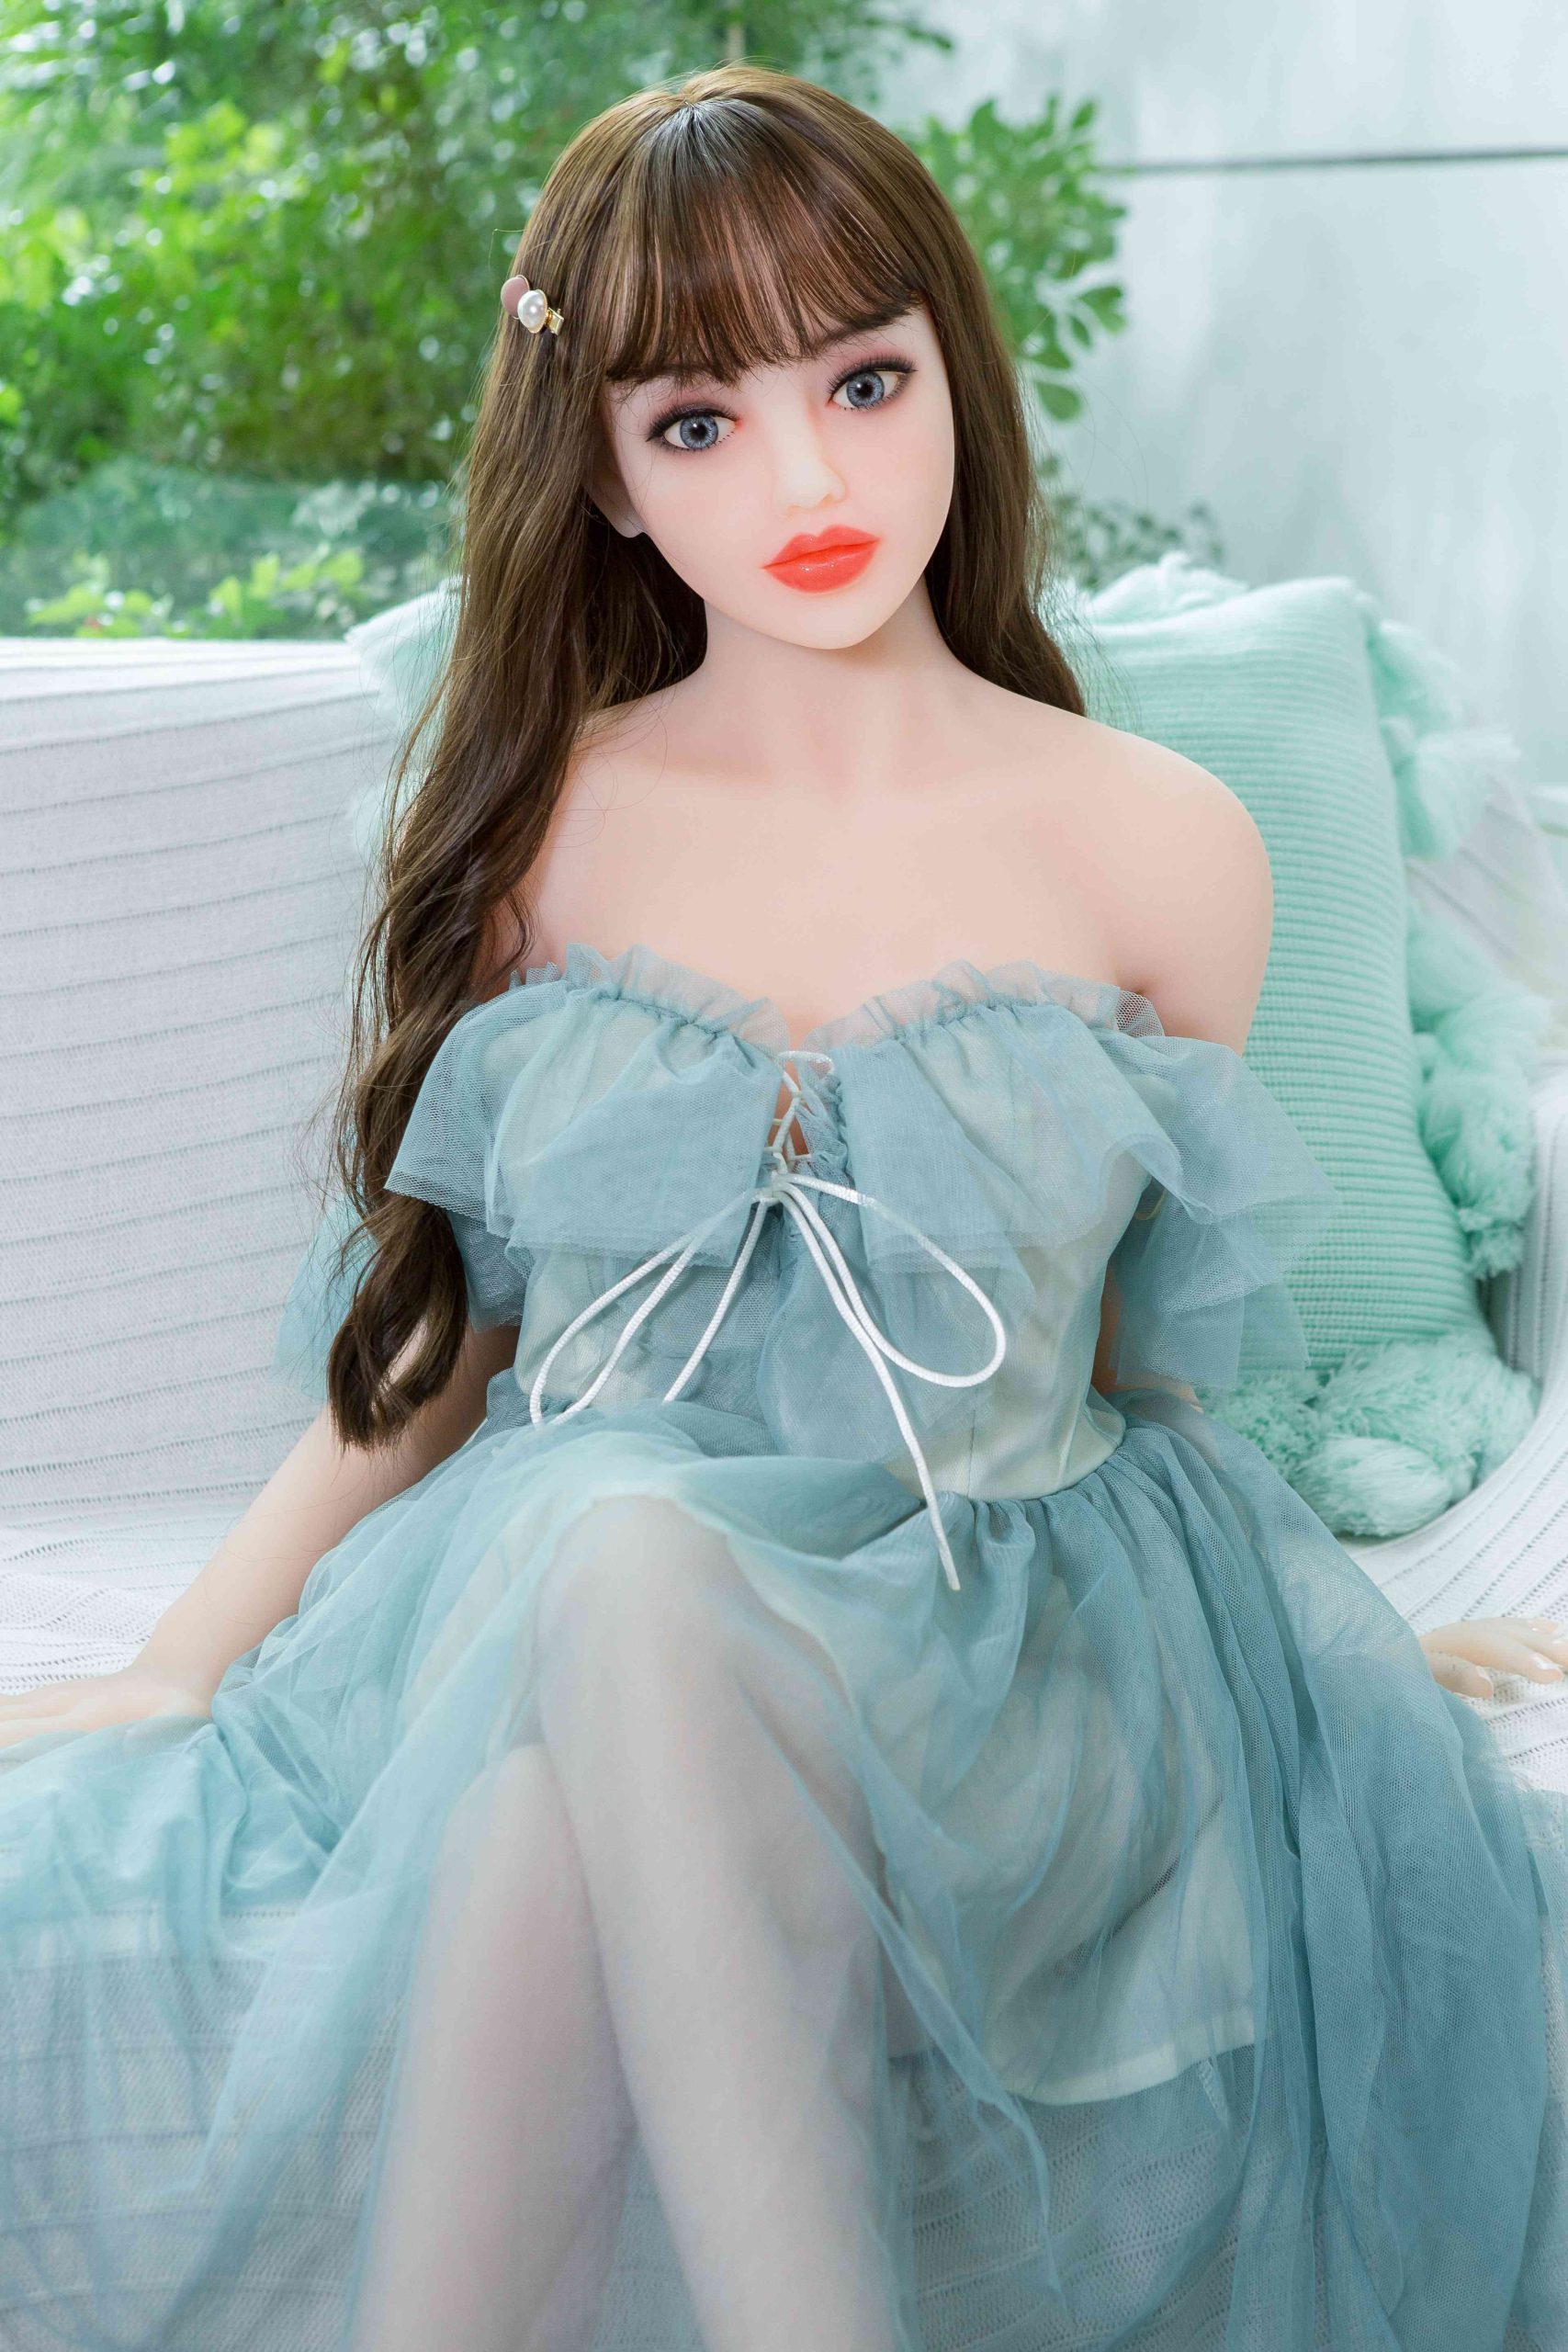 Customizable silicone love dolls